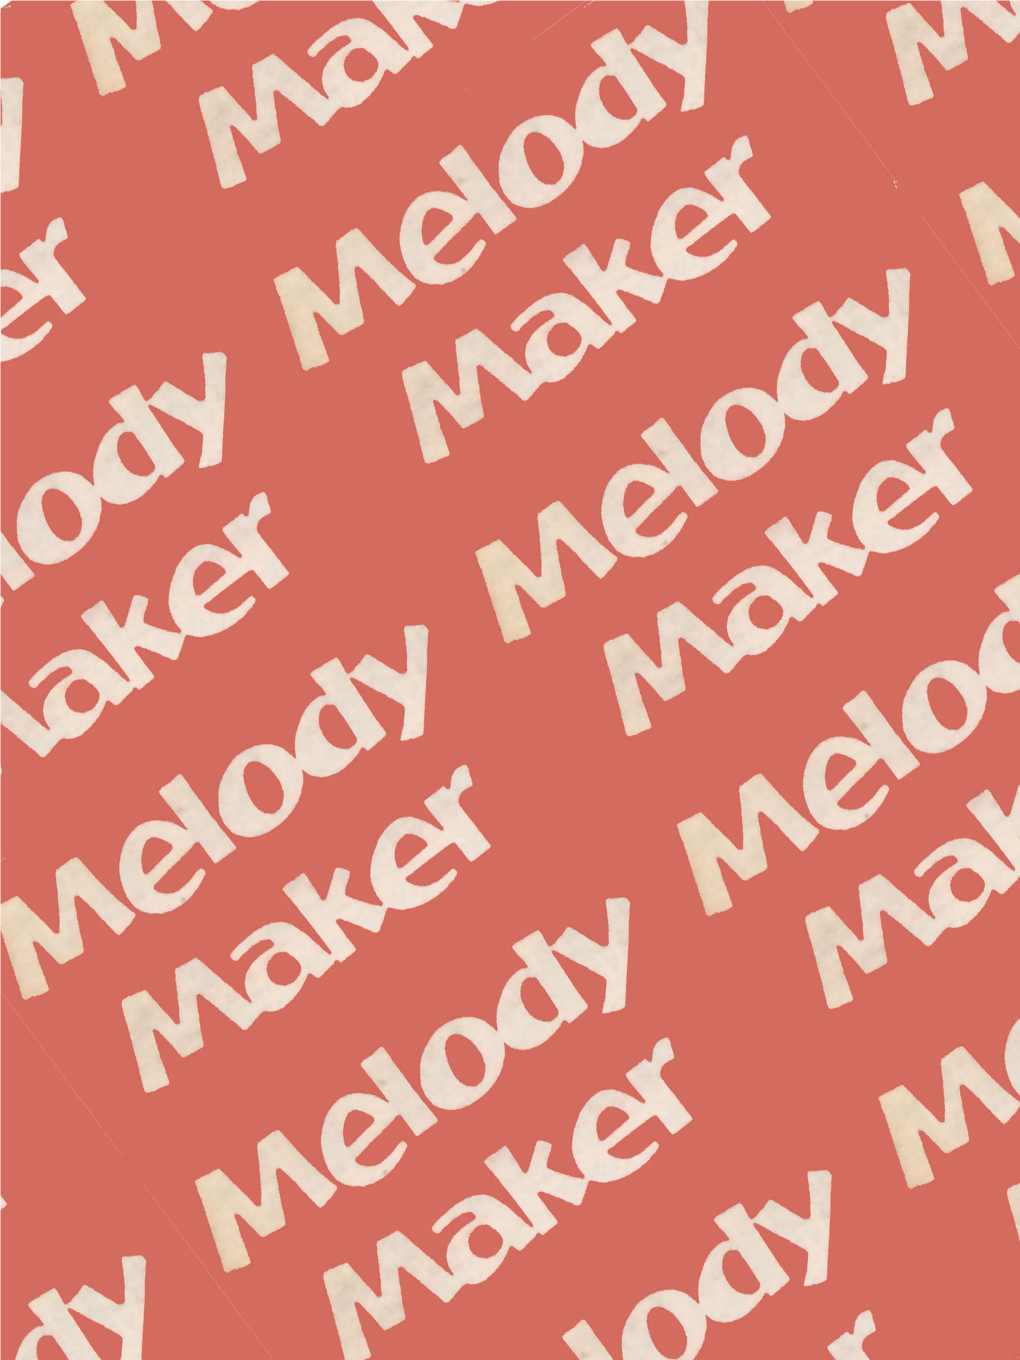 Melody-Maker-1968-09